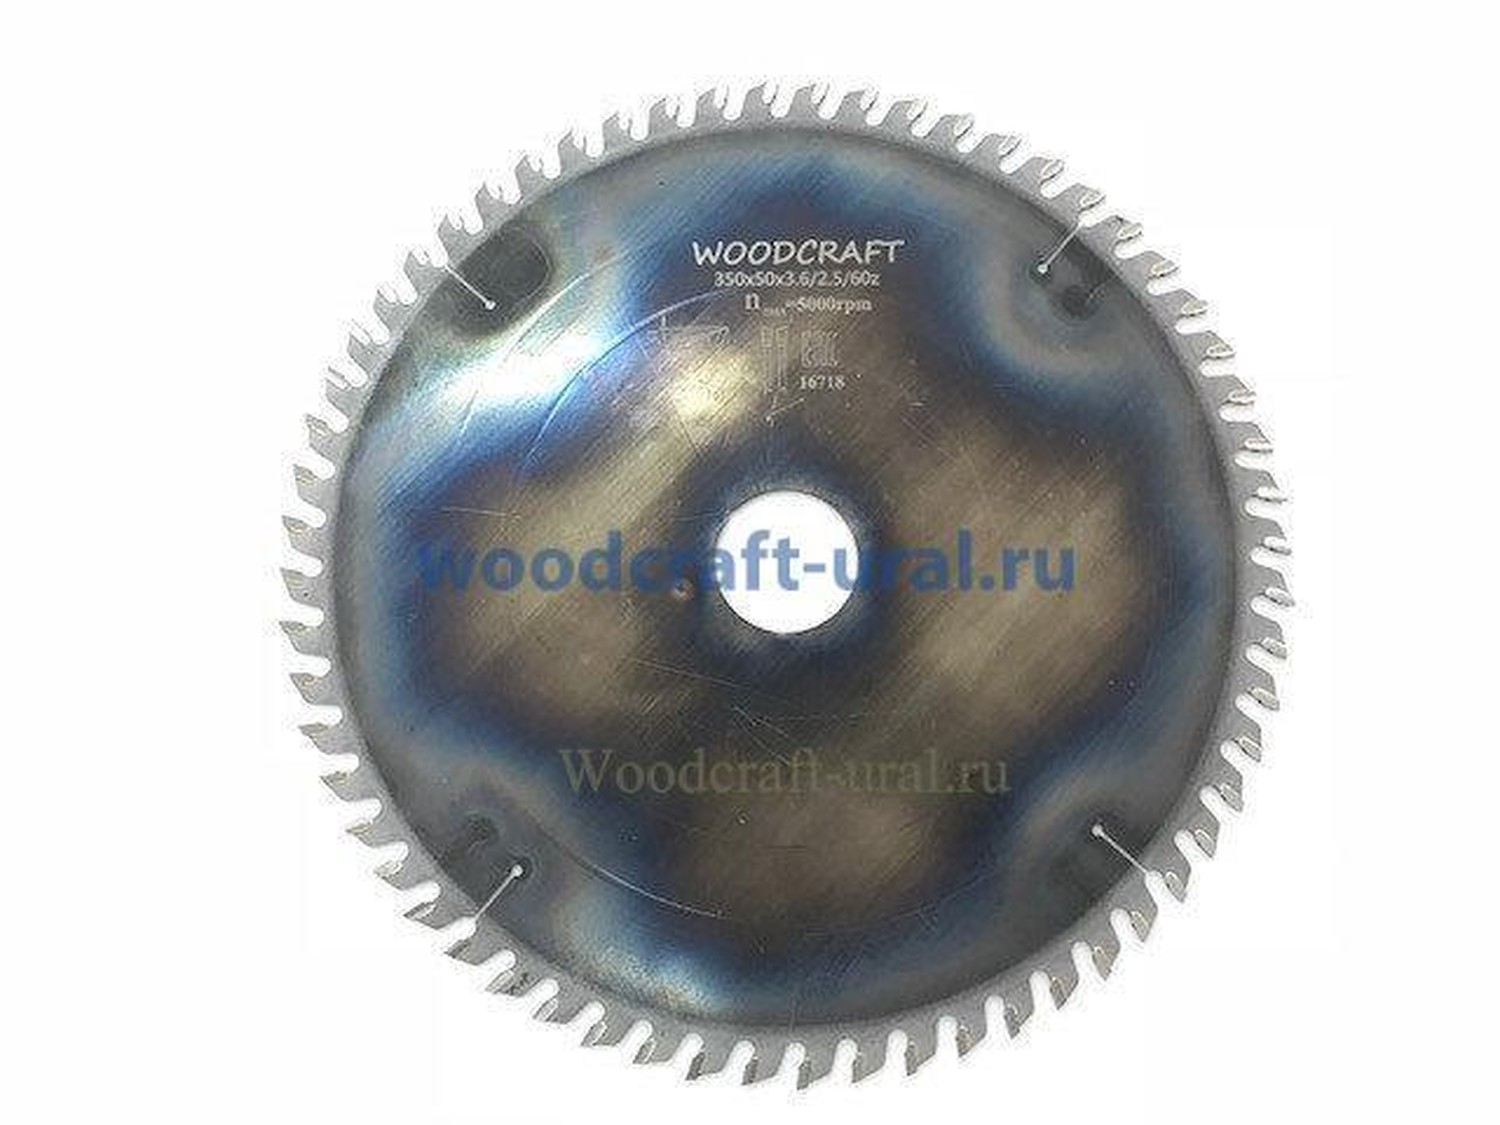   woodcraft    () 